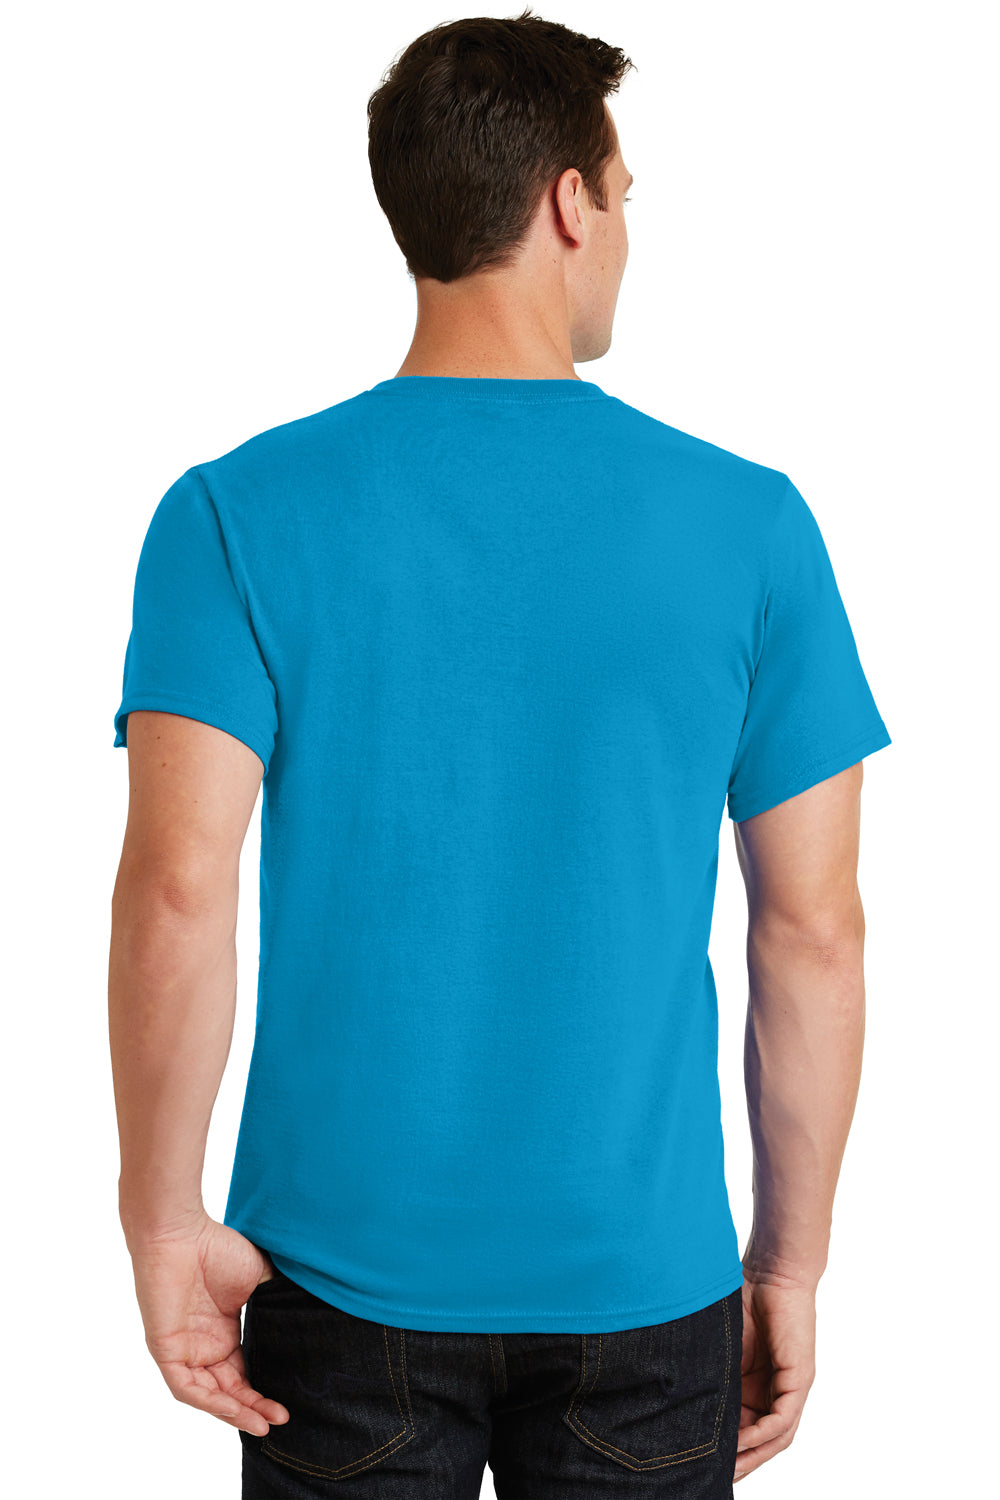 Port & Company PC61 Mens Essential Short Sleeve Crewneck T-Shirt Turquoise Blue Back